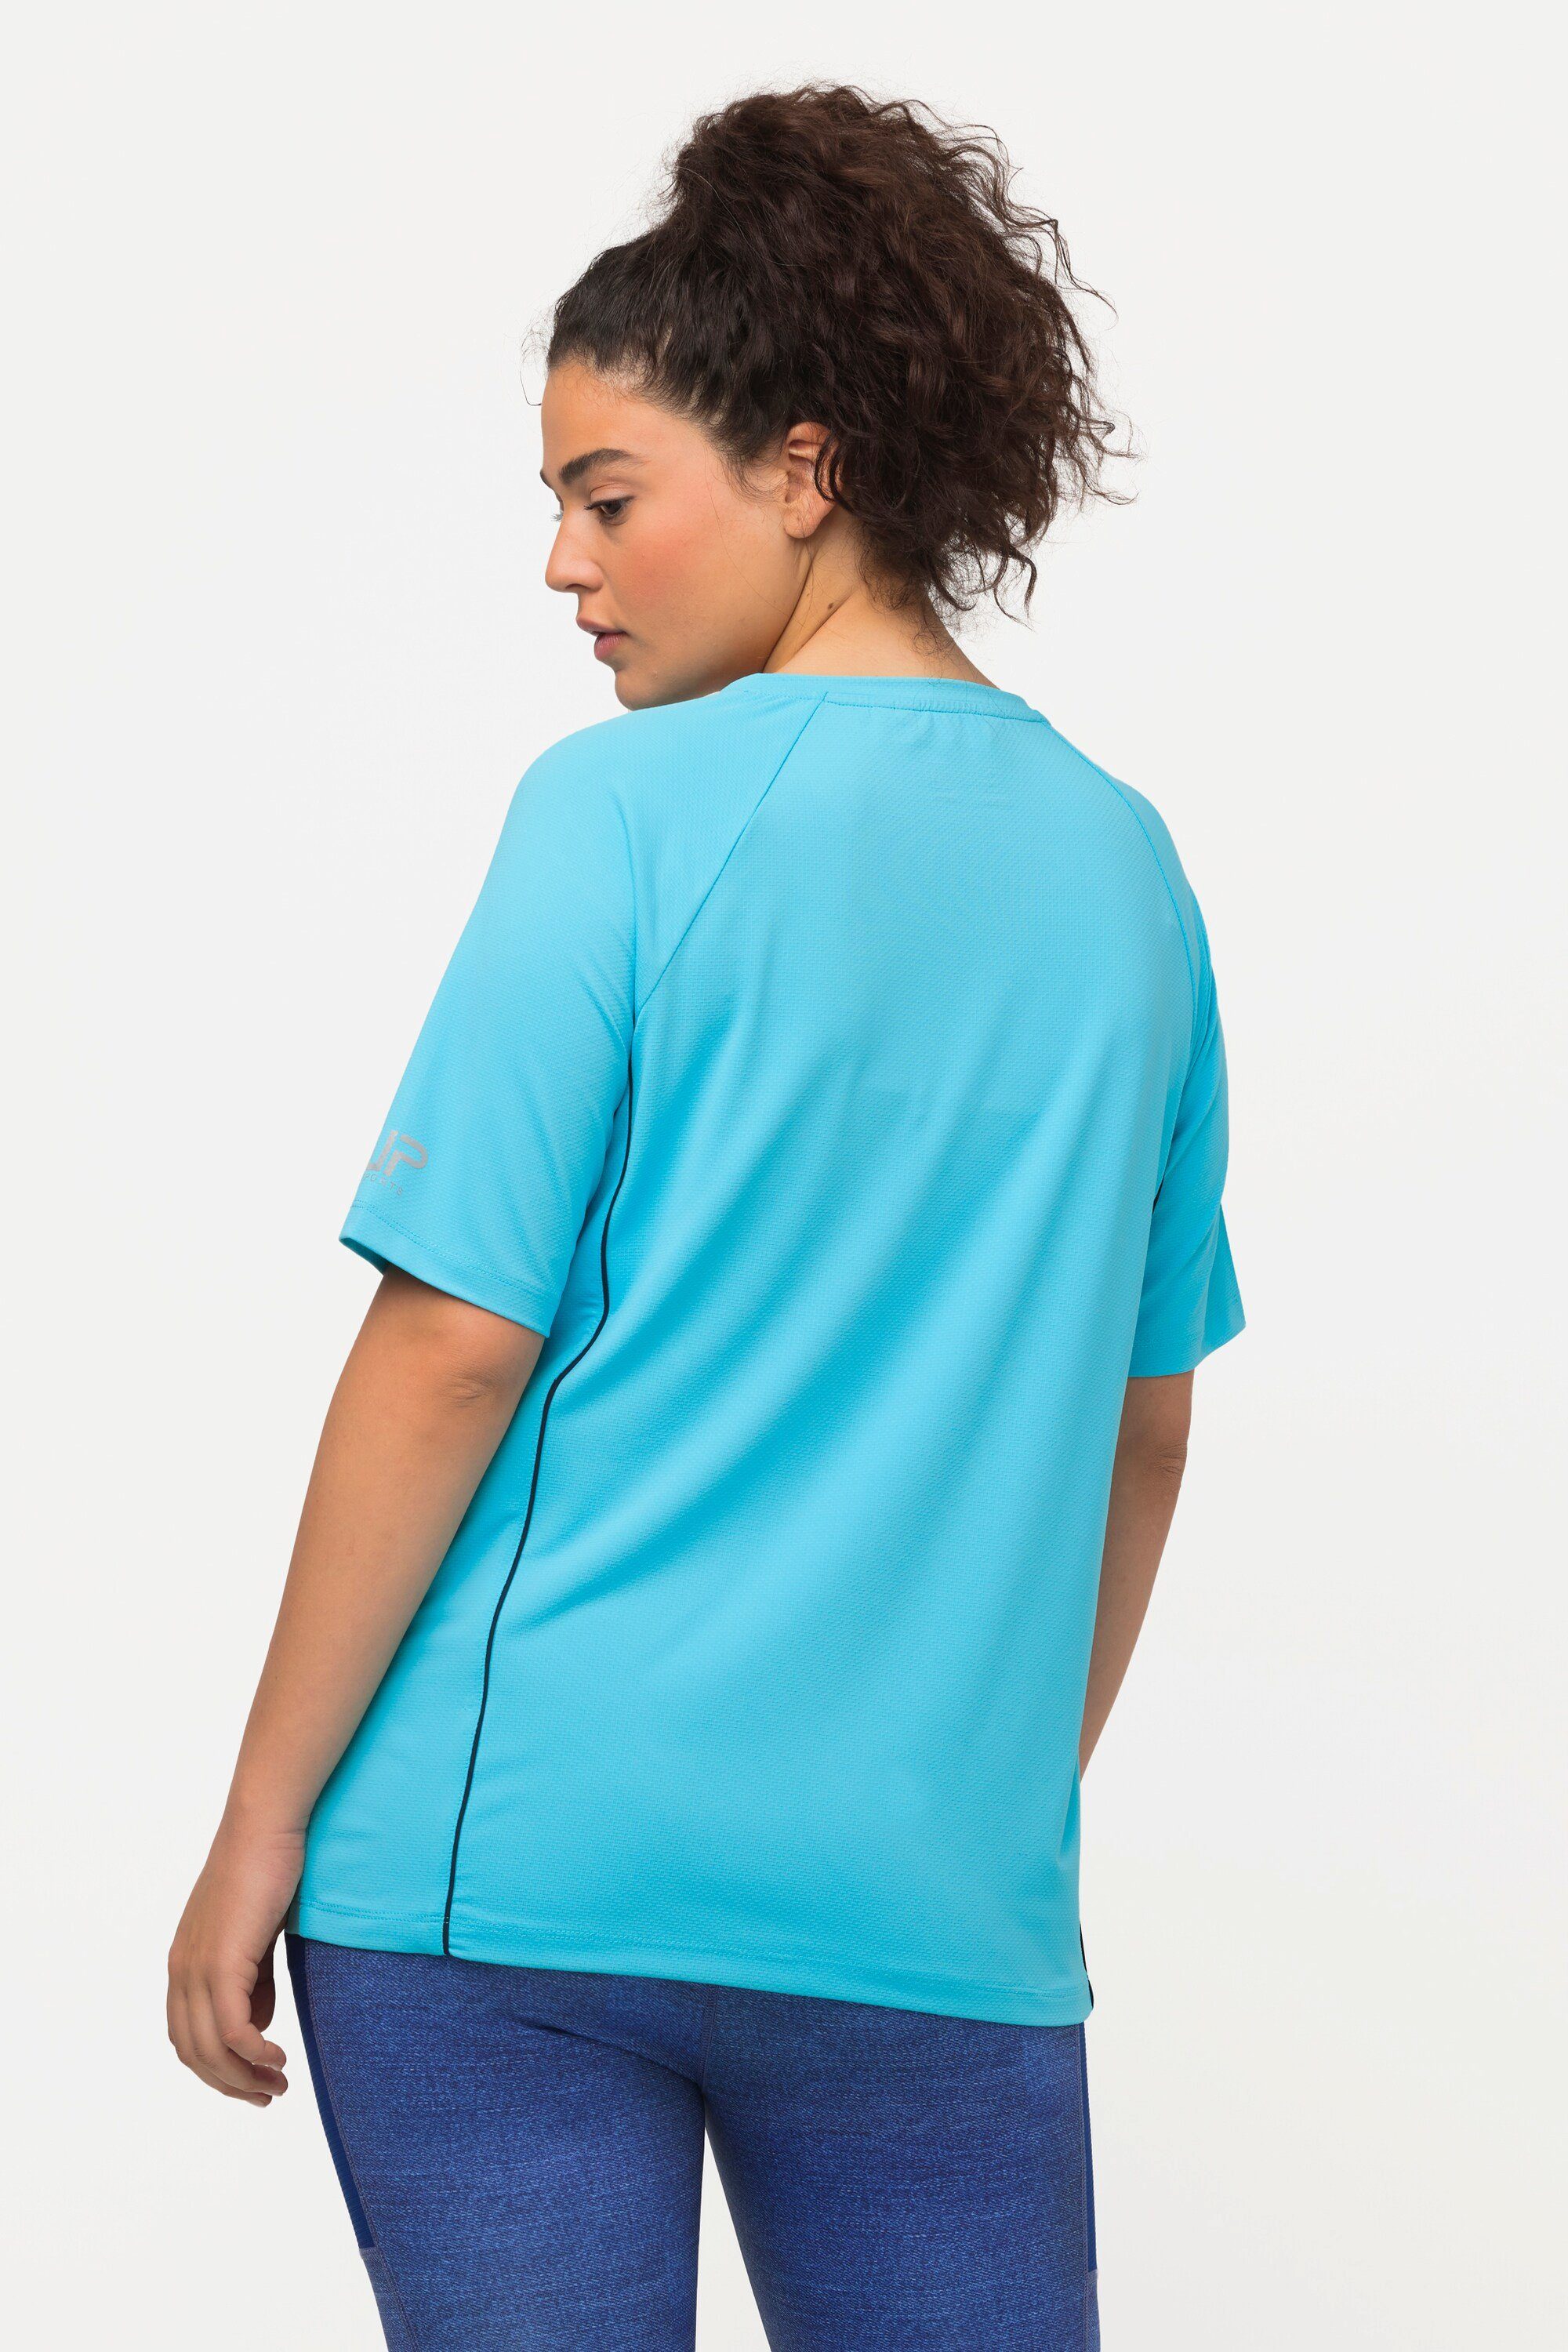 Halbarm türkis helles 50+ Rundhalsshirt V-Ausschnitt UV-Schutz T-Shirt Ulla Popken